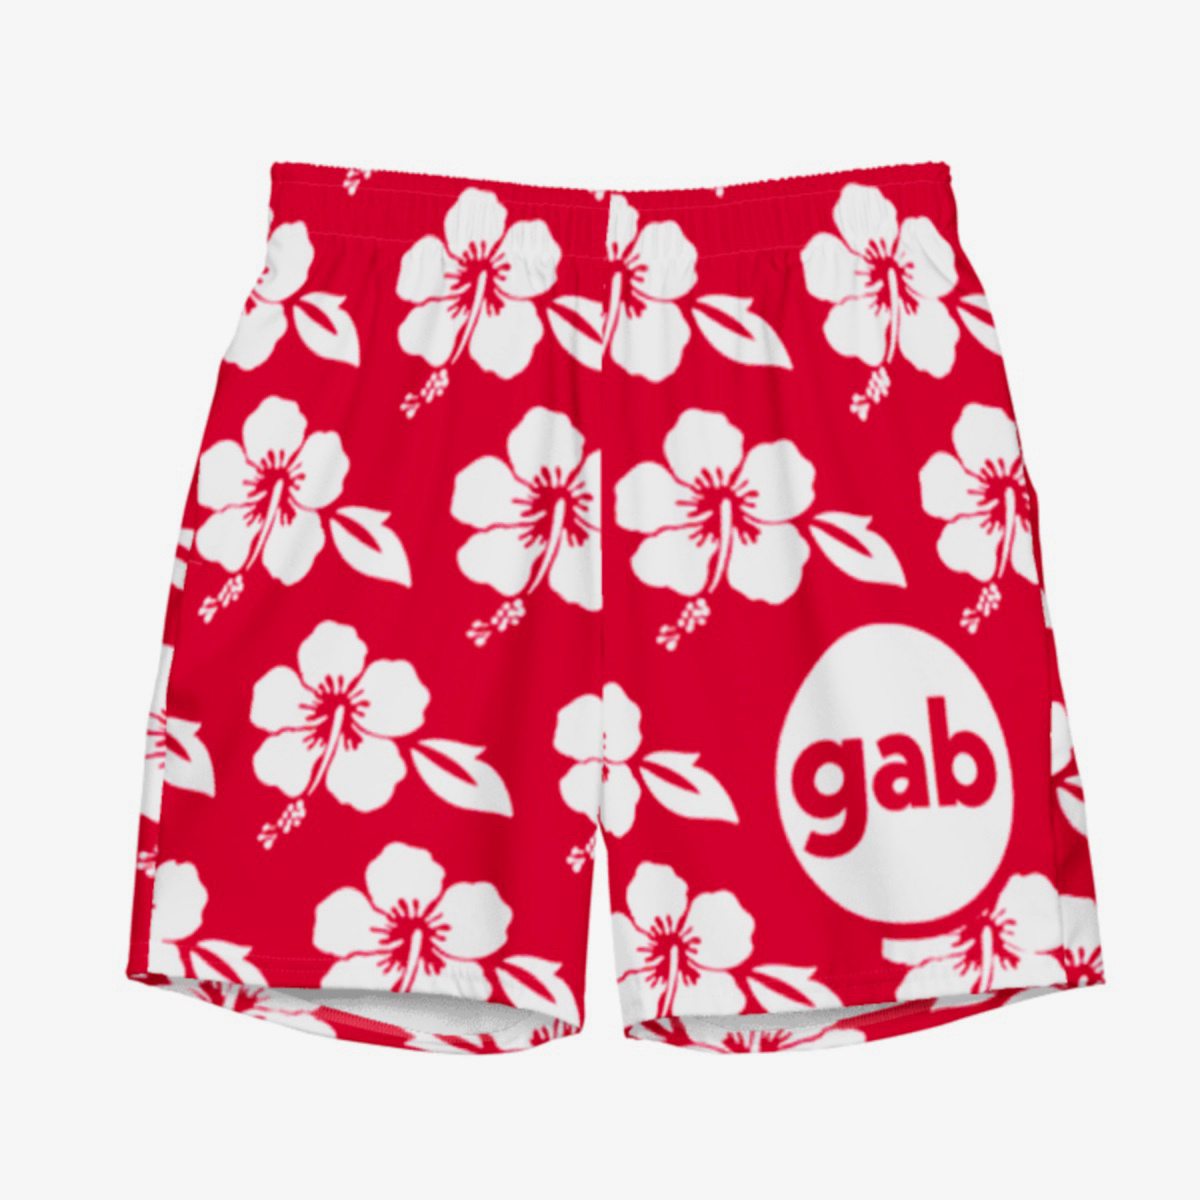 Gab Red Flower Swim Trunks - L